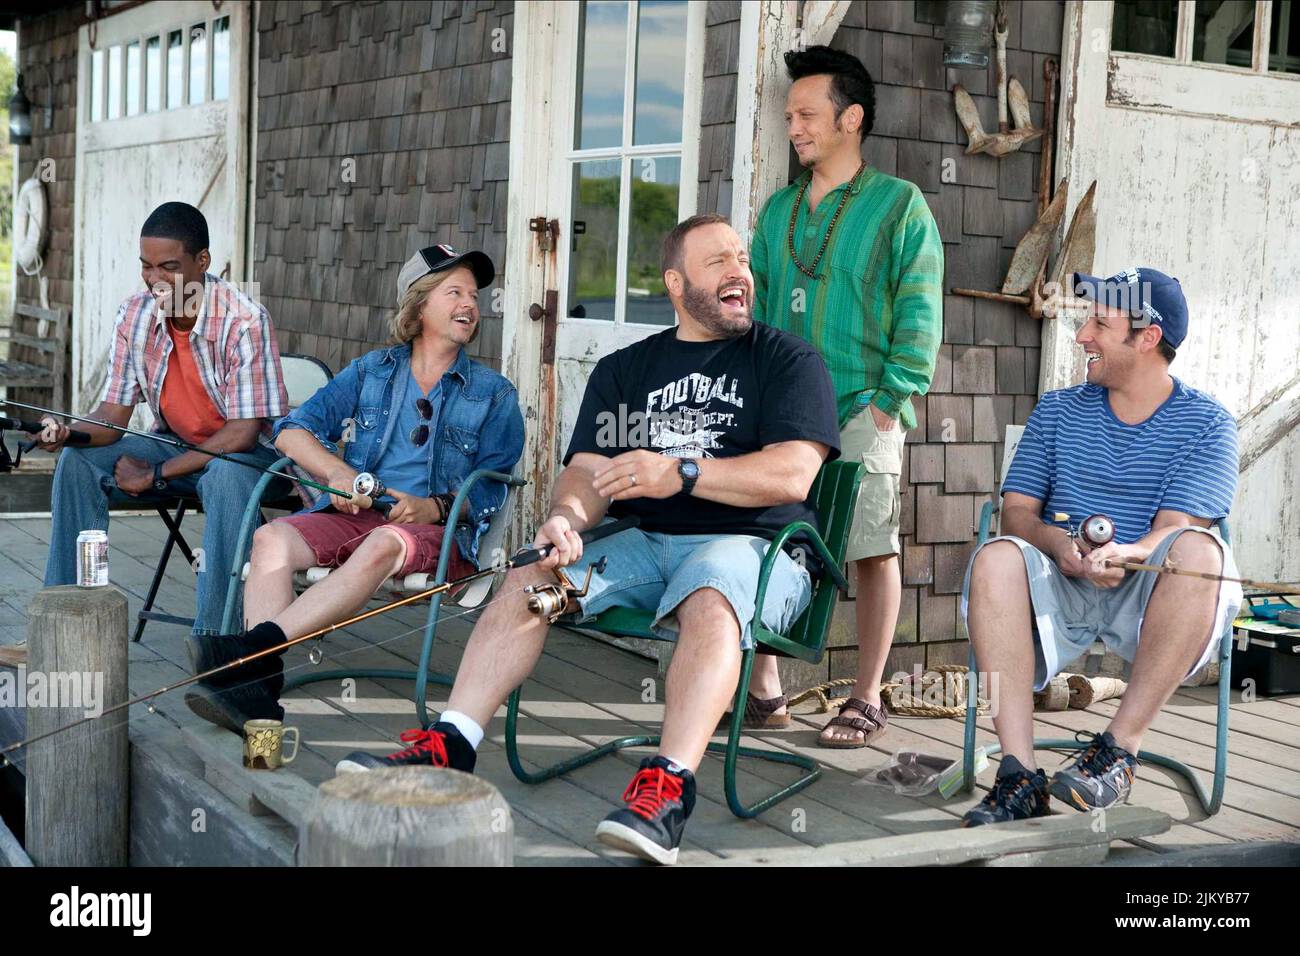 CHRIS ROCK, DAVID SPADE, KEVIN JAMES, ROB SCHNEIDER, ADAM SANDLER, GROWN UPS, 2010 Stock Photo